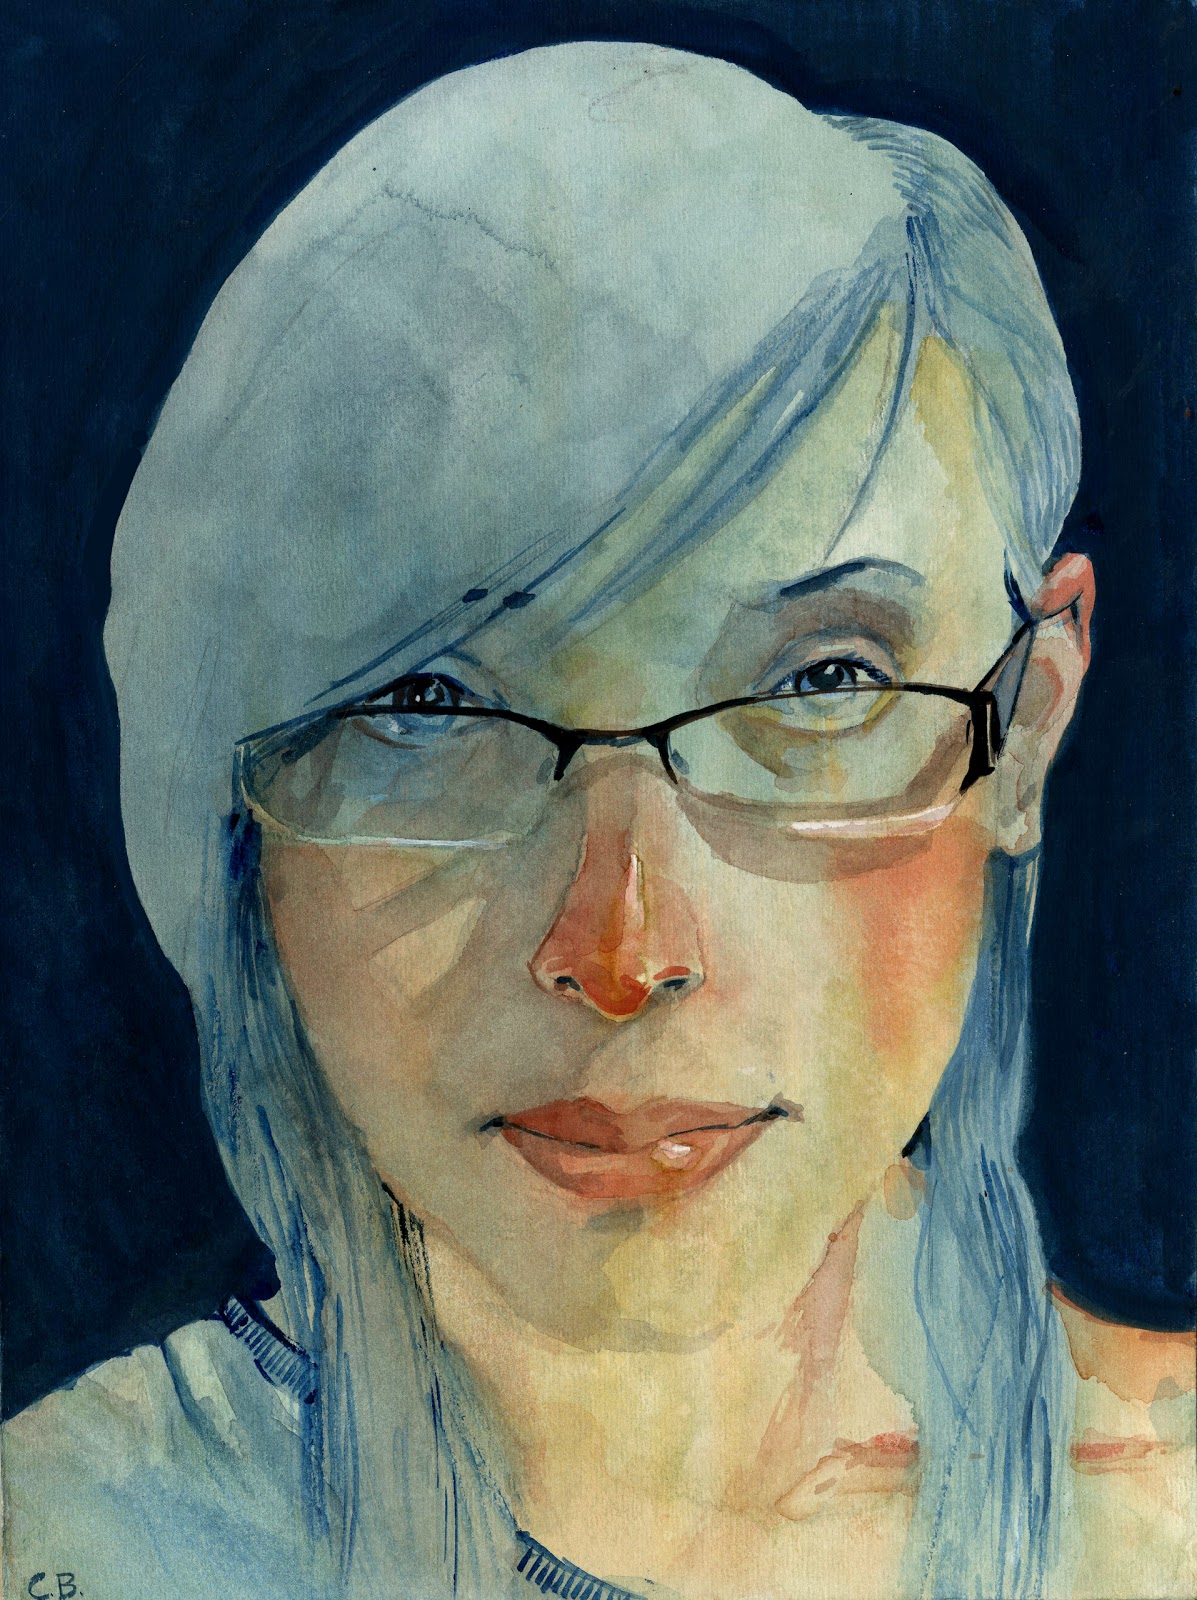 Chris Baldwin Illustration: Watercolor Portraits